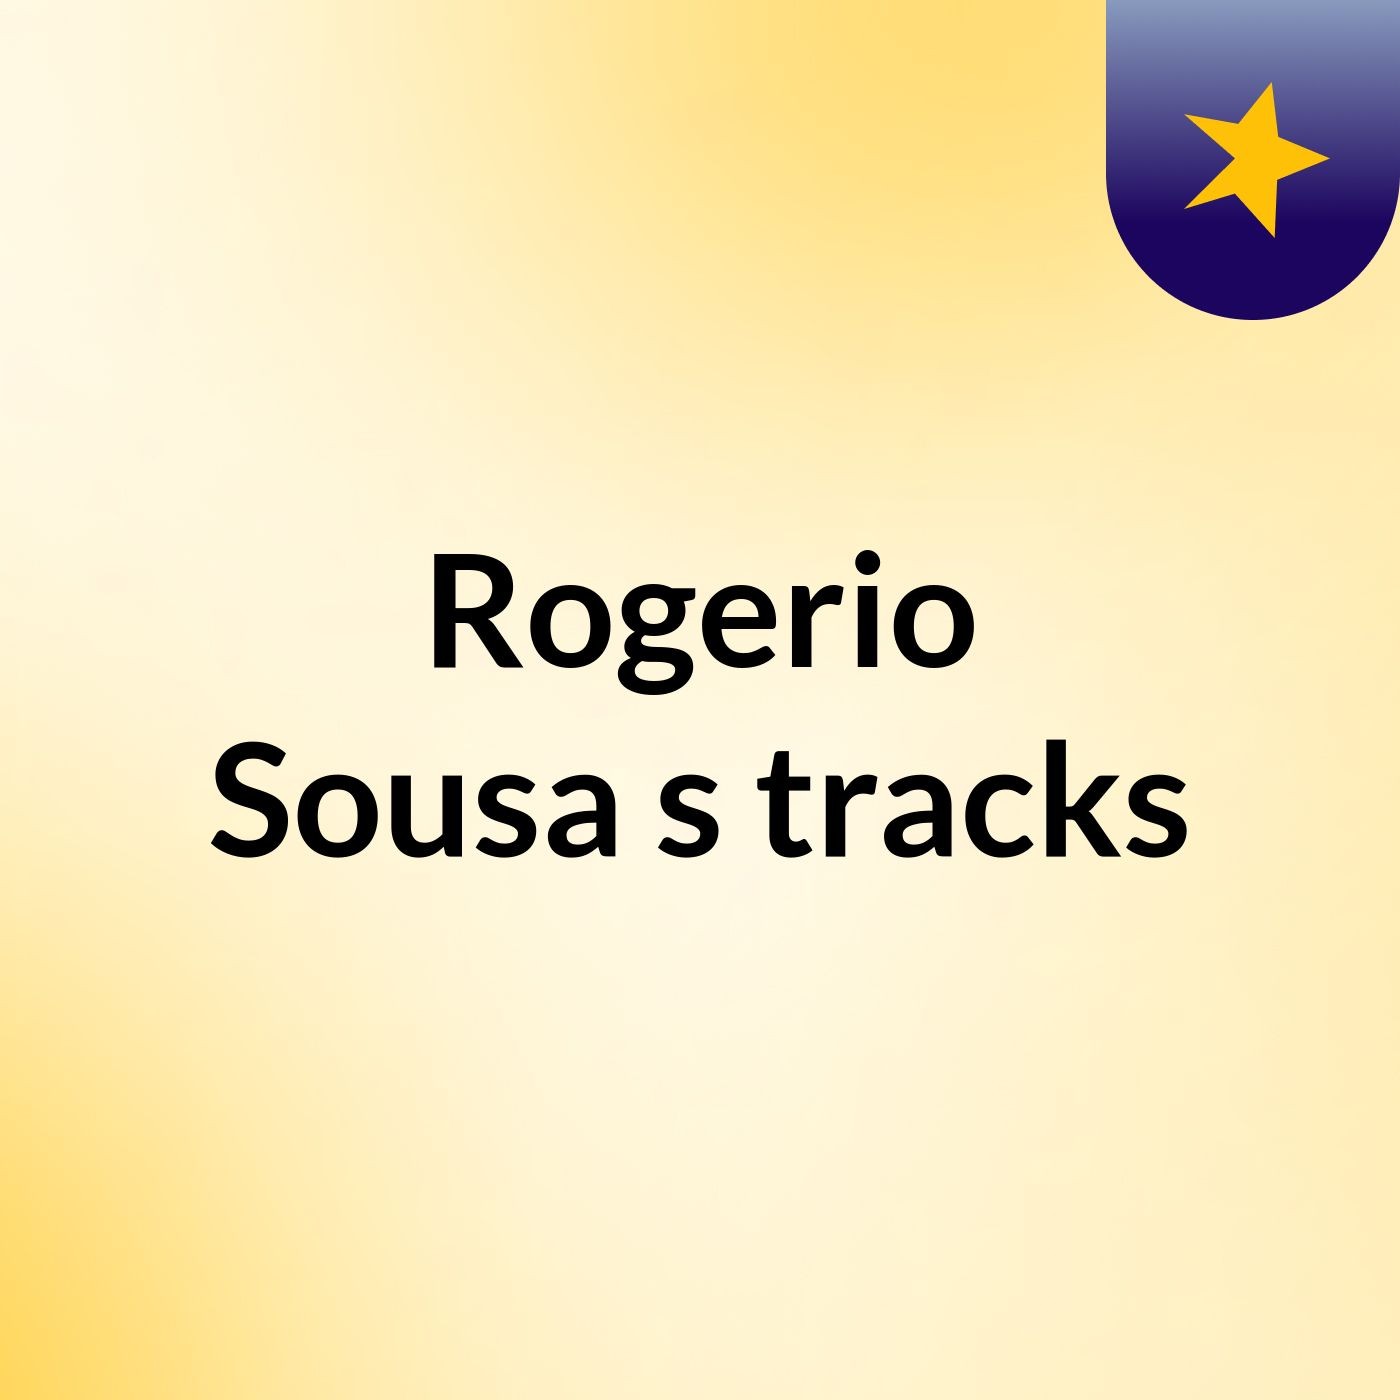 Rogerio Sousa's tracks